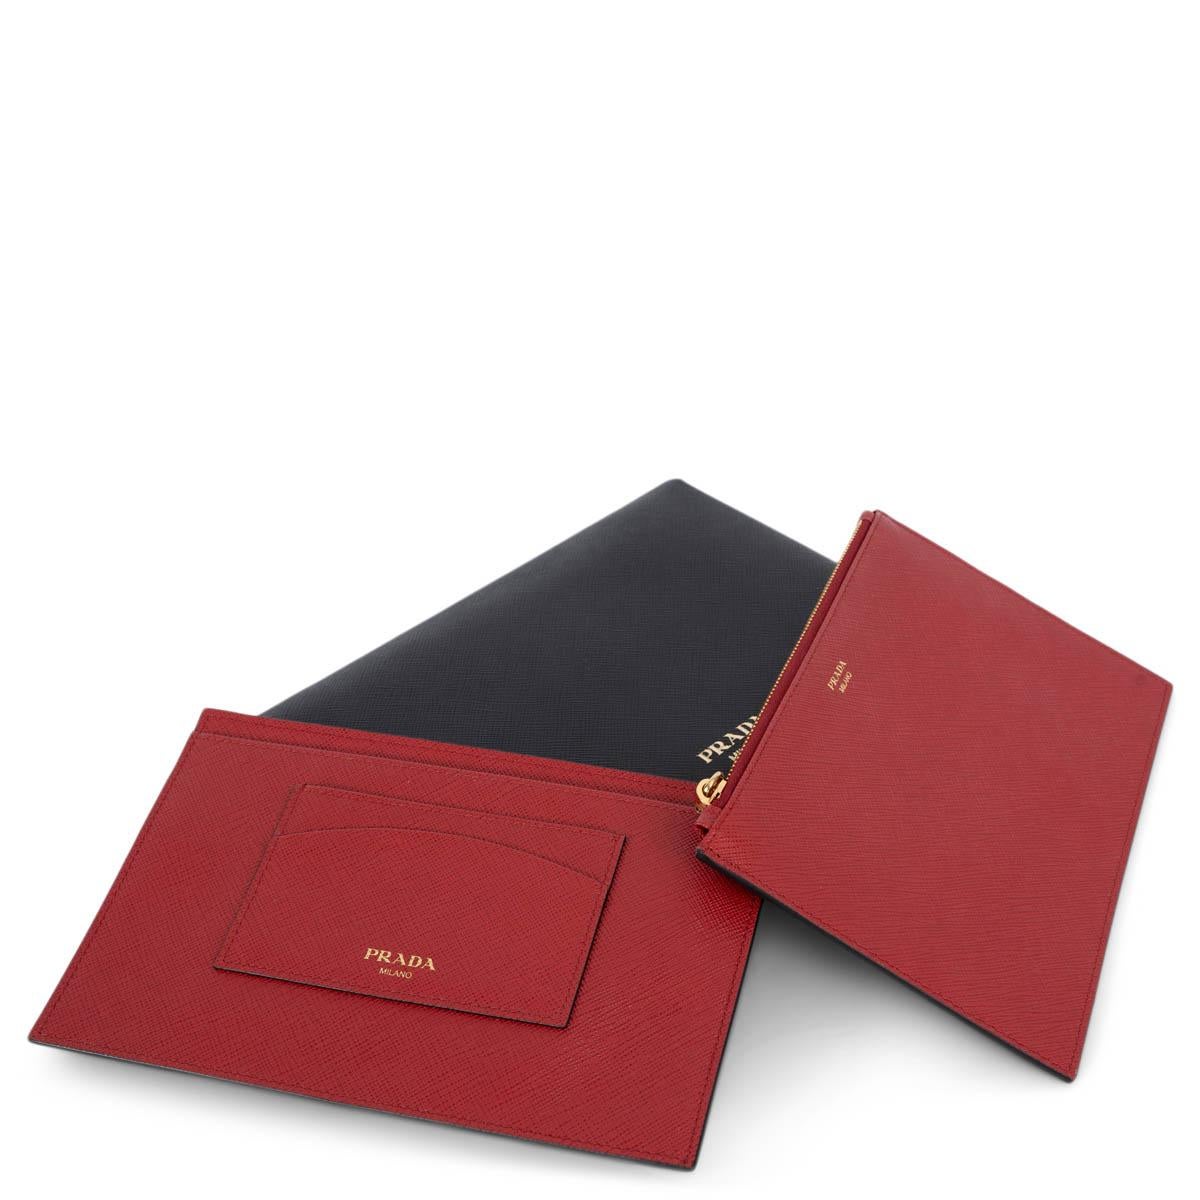 PRADA black / red Saffiano leather SMALL DOCUMENT PORTFOLIO Pouch Bag For Sale 2